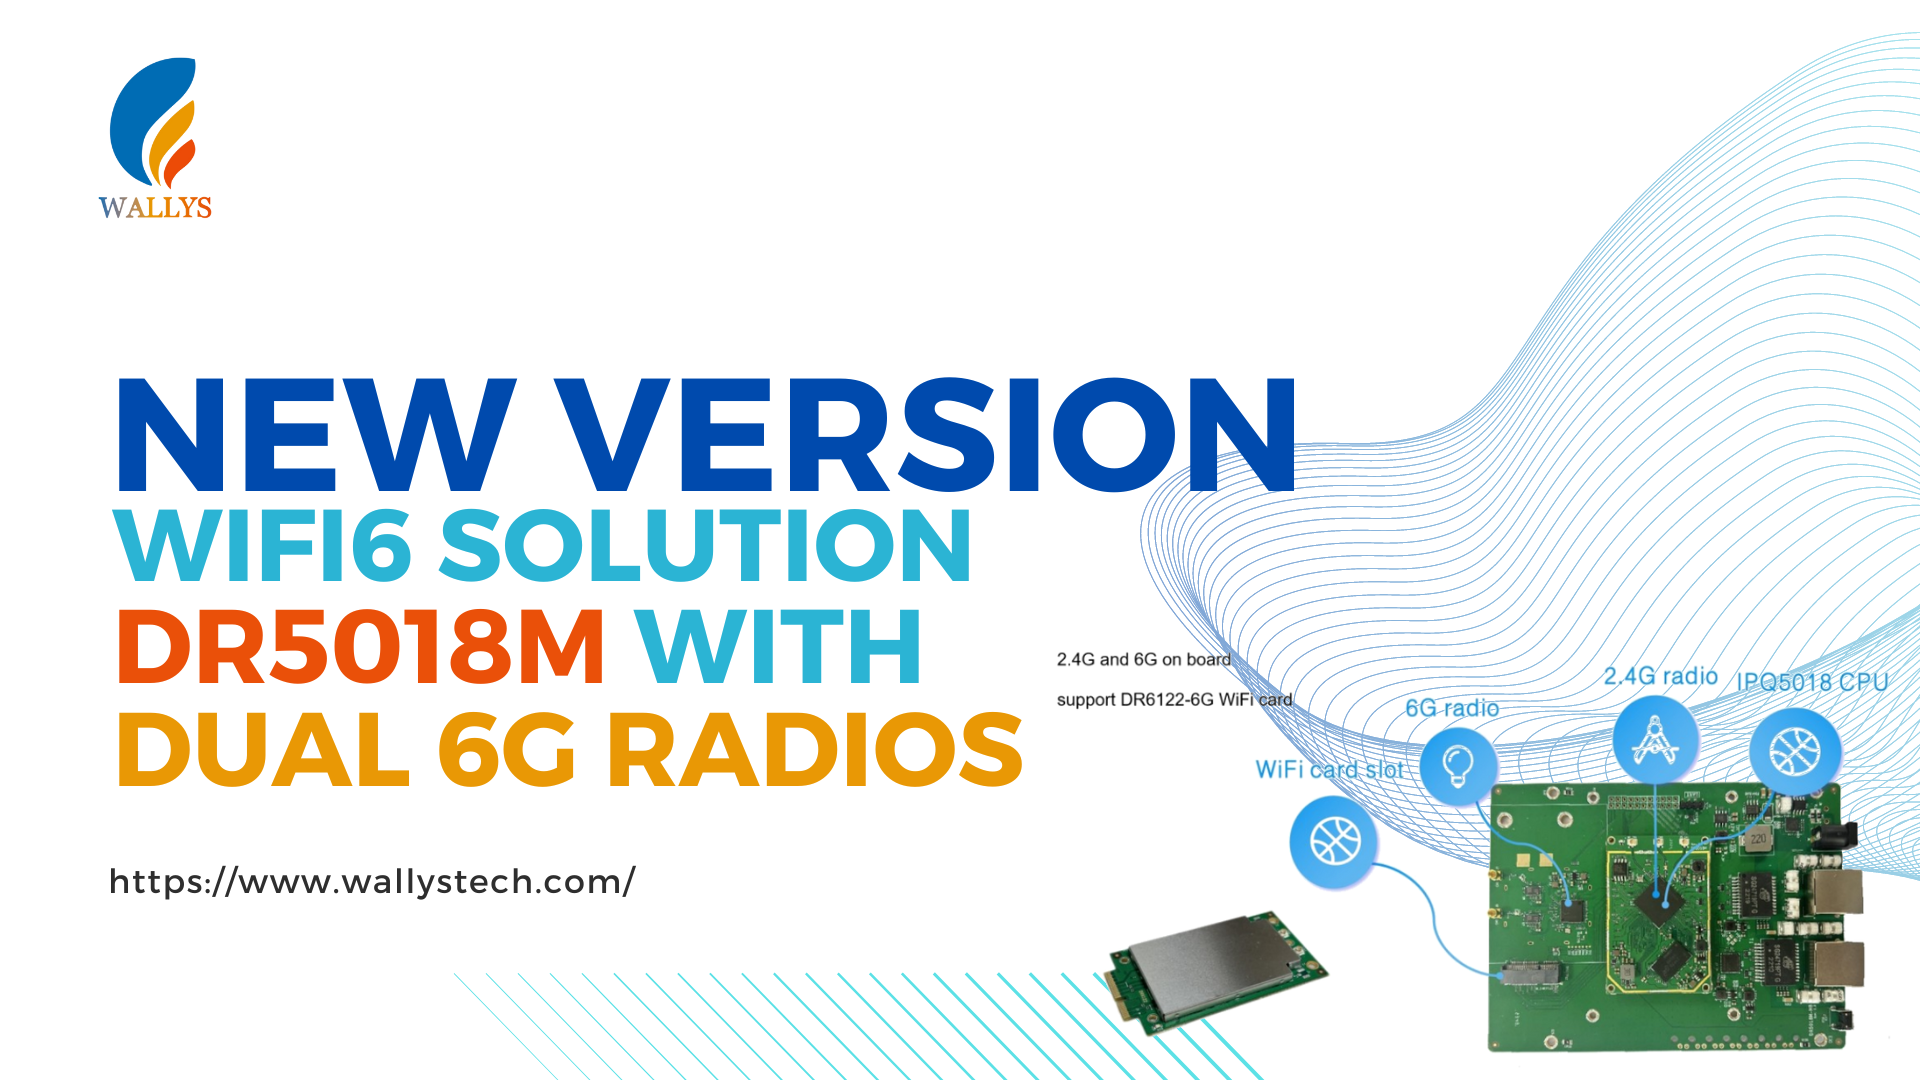 IPQ5018 with QCN6122 Wallys’ Enhanced WiFi6 Solution with Dual 6G Radios!